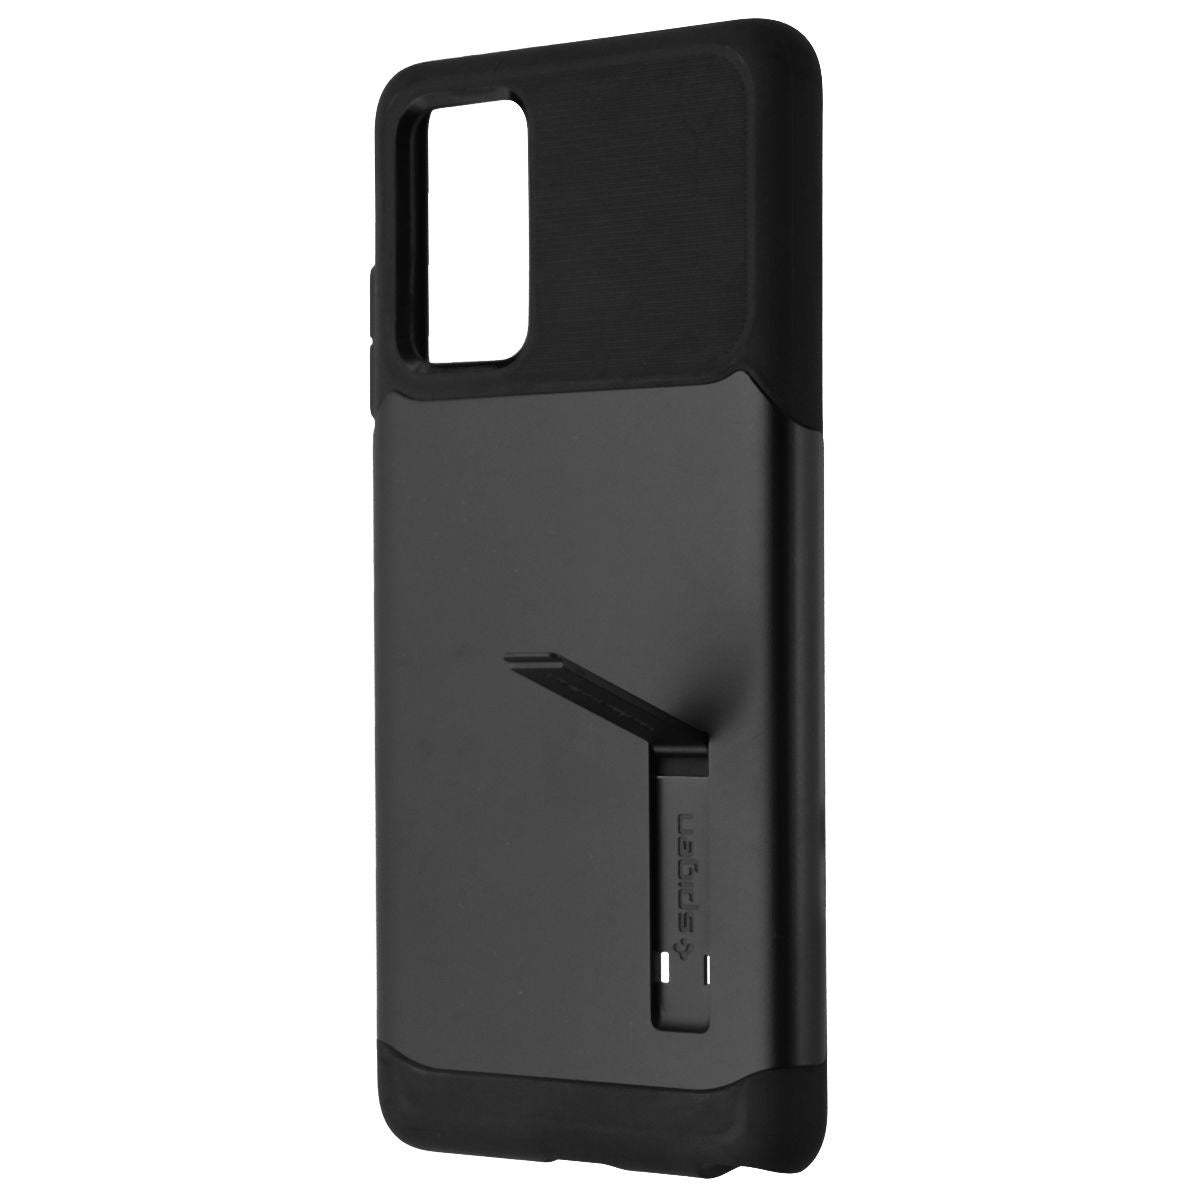 Spigen Slim Armor Case for Samsung Galaxy Note20 (2020) - Black Cell Phone - Cases, Covers & Skins Spigen    - Simple Cell Bulk Wholesale Pricing - USA Seller